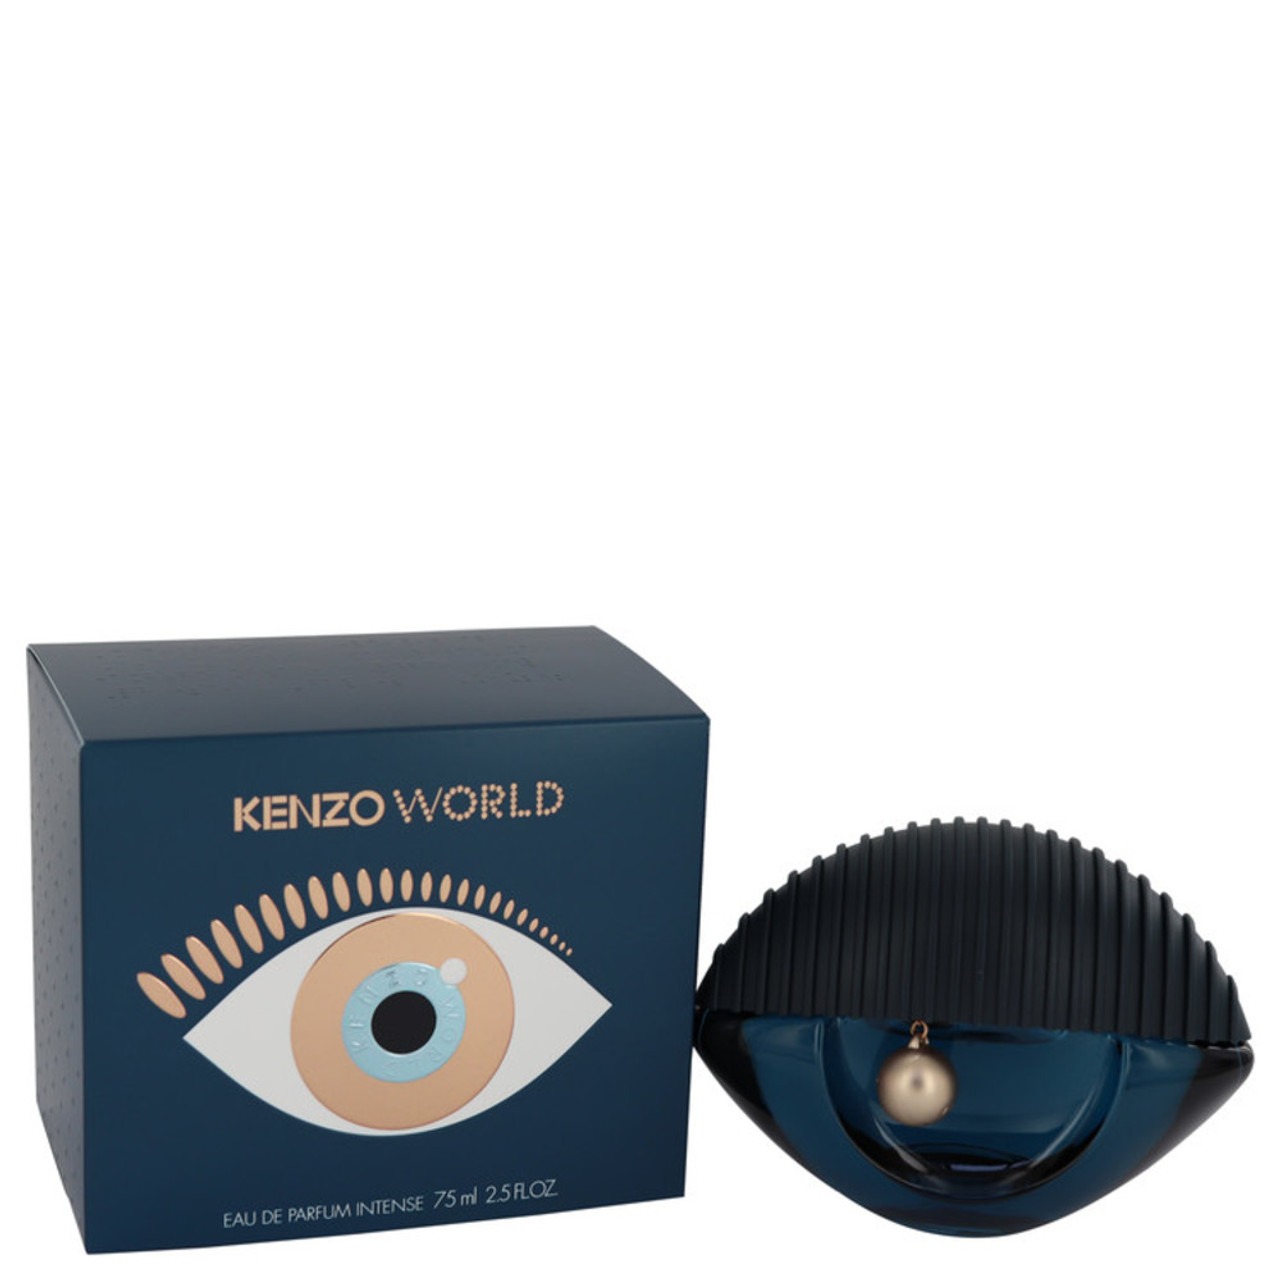 SPRAY KENZO PARFUM FOR WOMEN - INTENSE International EAU 2.5 WORLD Nandansons DE